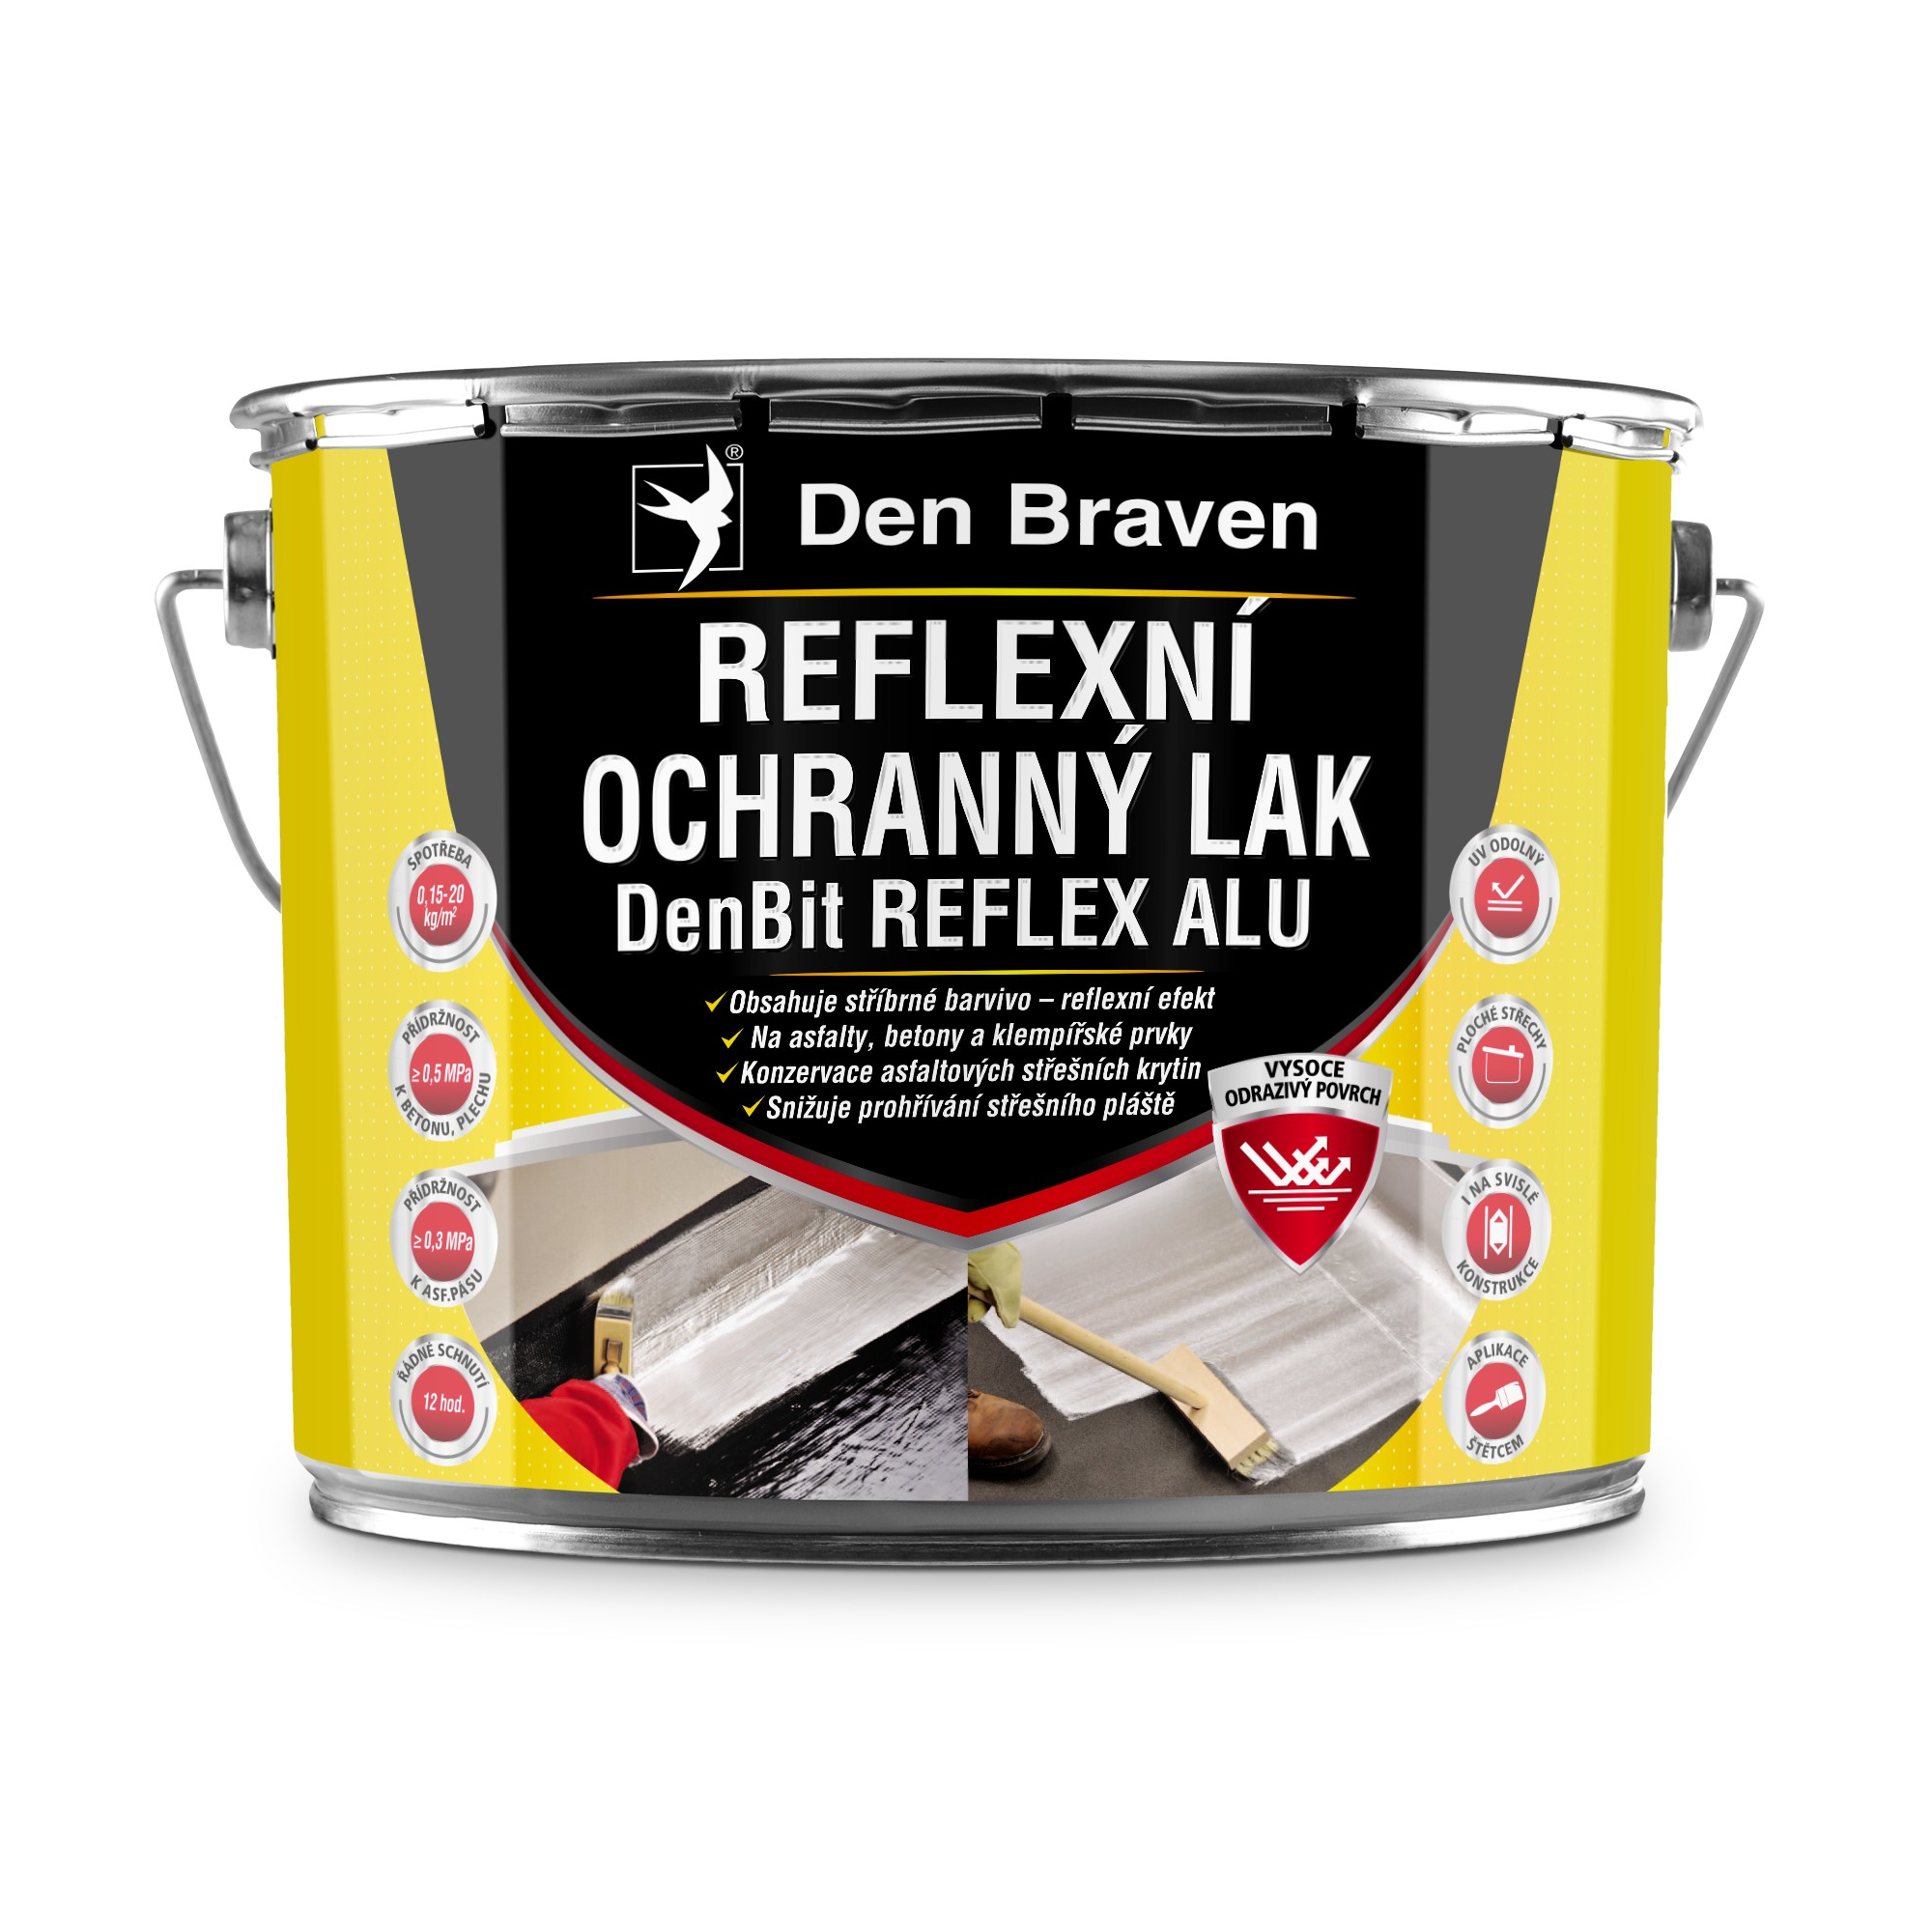 Lak ochranný reflexní DenBit Reflex Alu 9 kg DEN BRAVEN